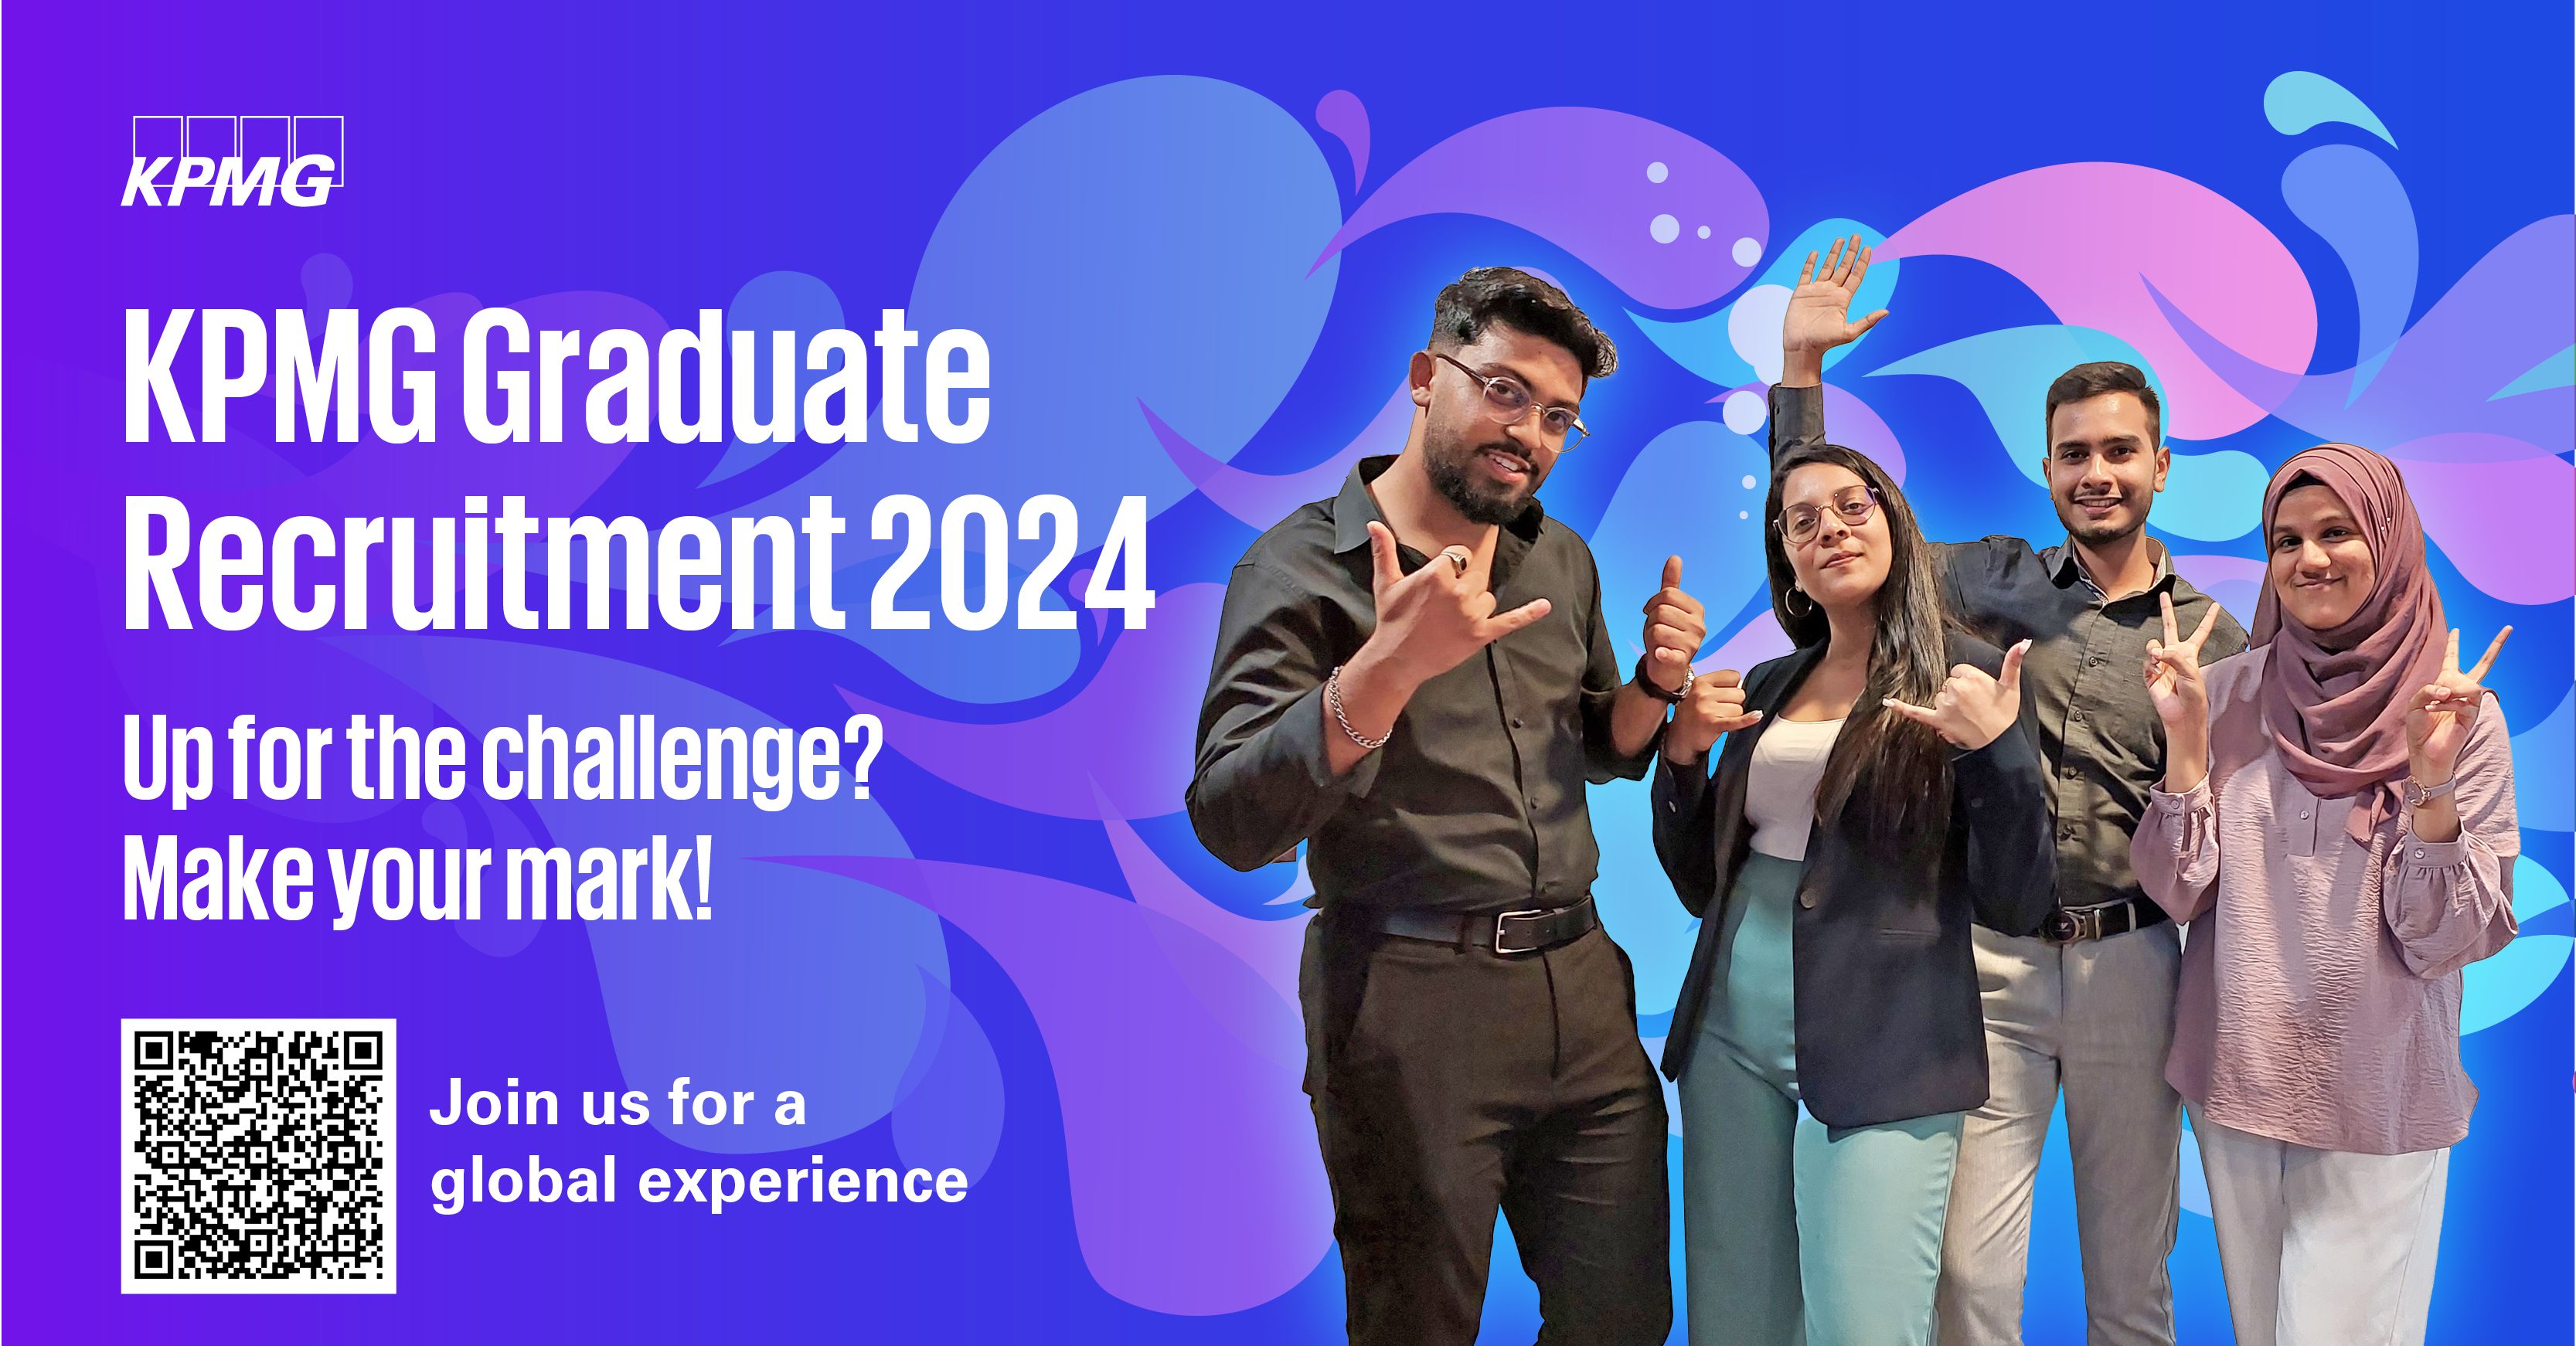 KPMG Graduate Recruitment 2024 